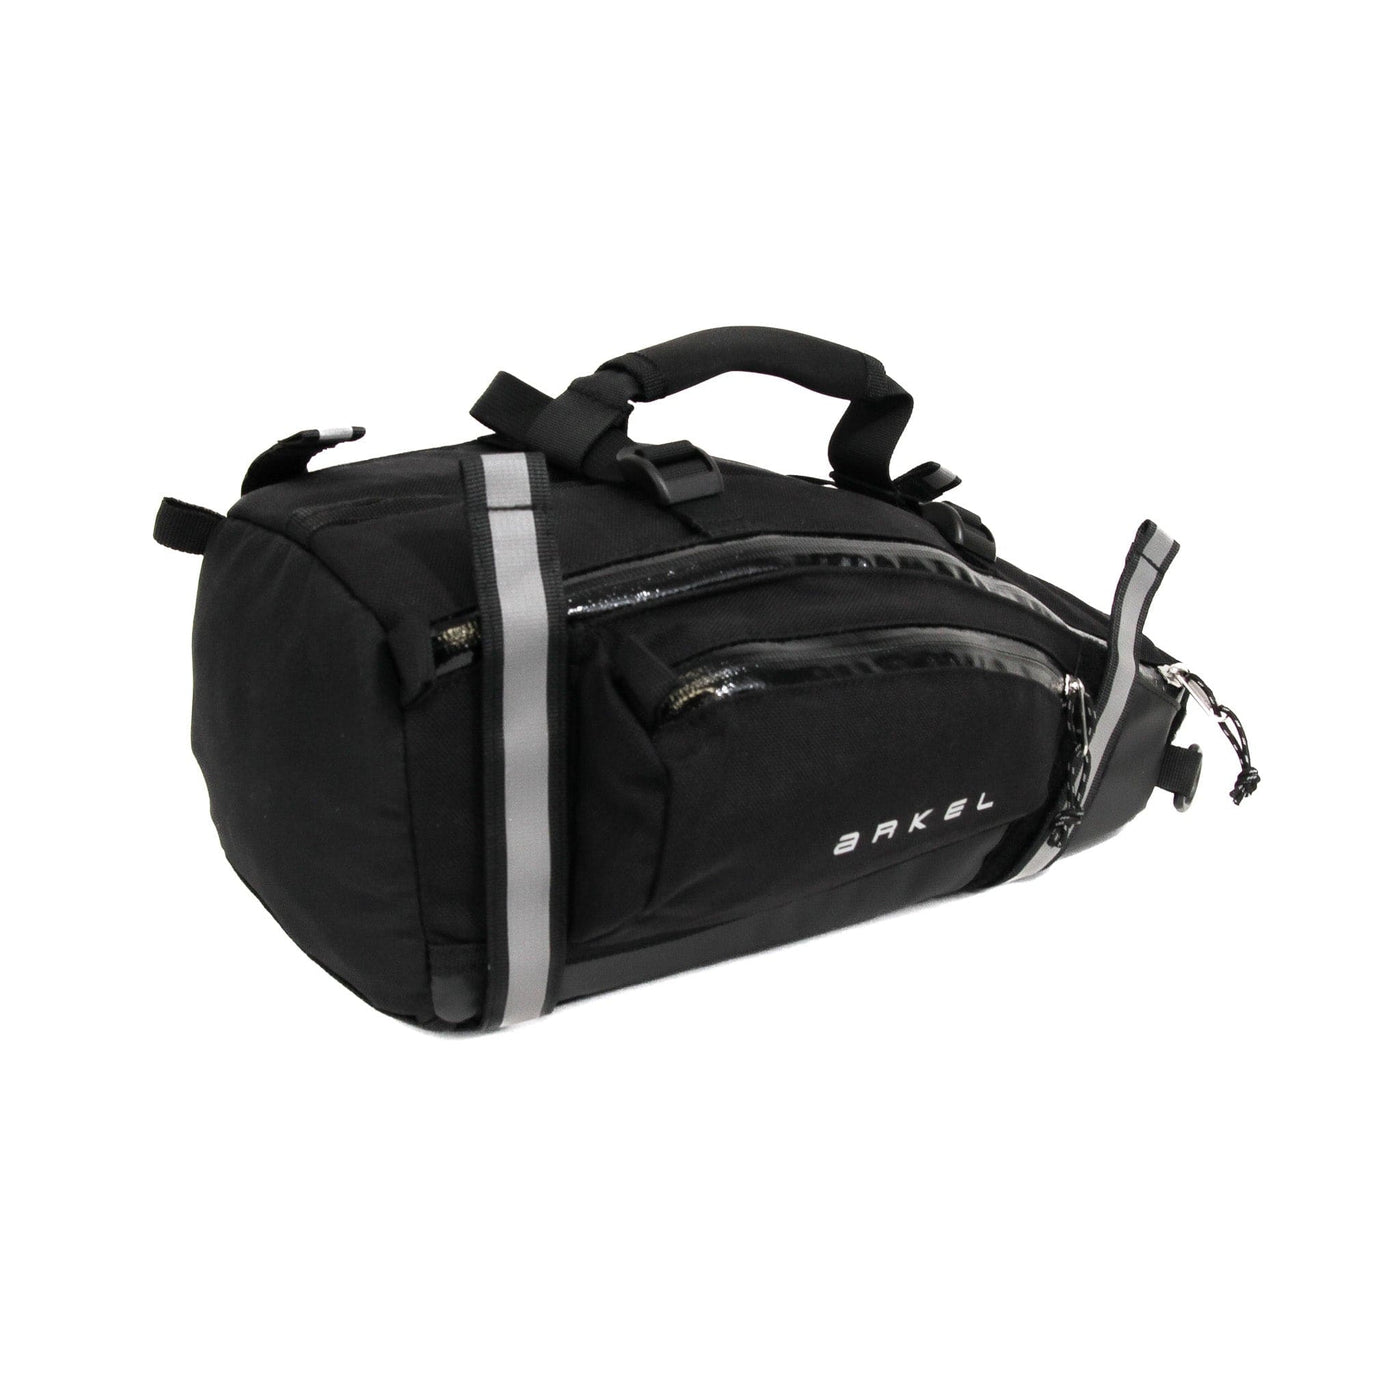 Arkel Bike Bags Cordura Black / 11 L TailRider - Trunk Bag